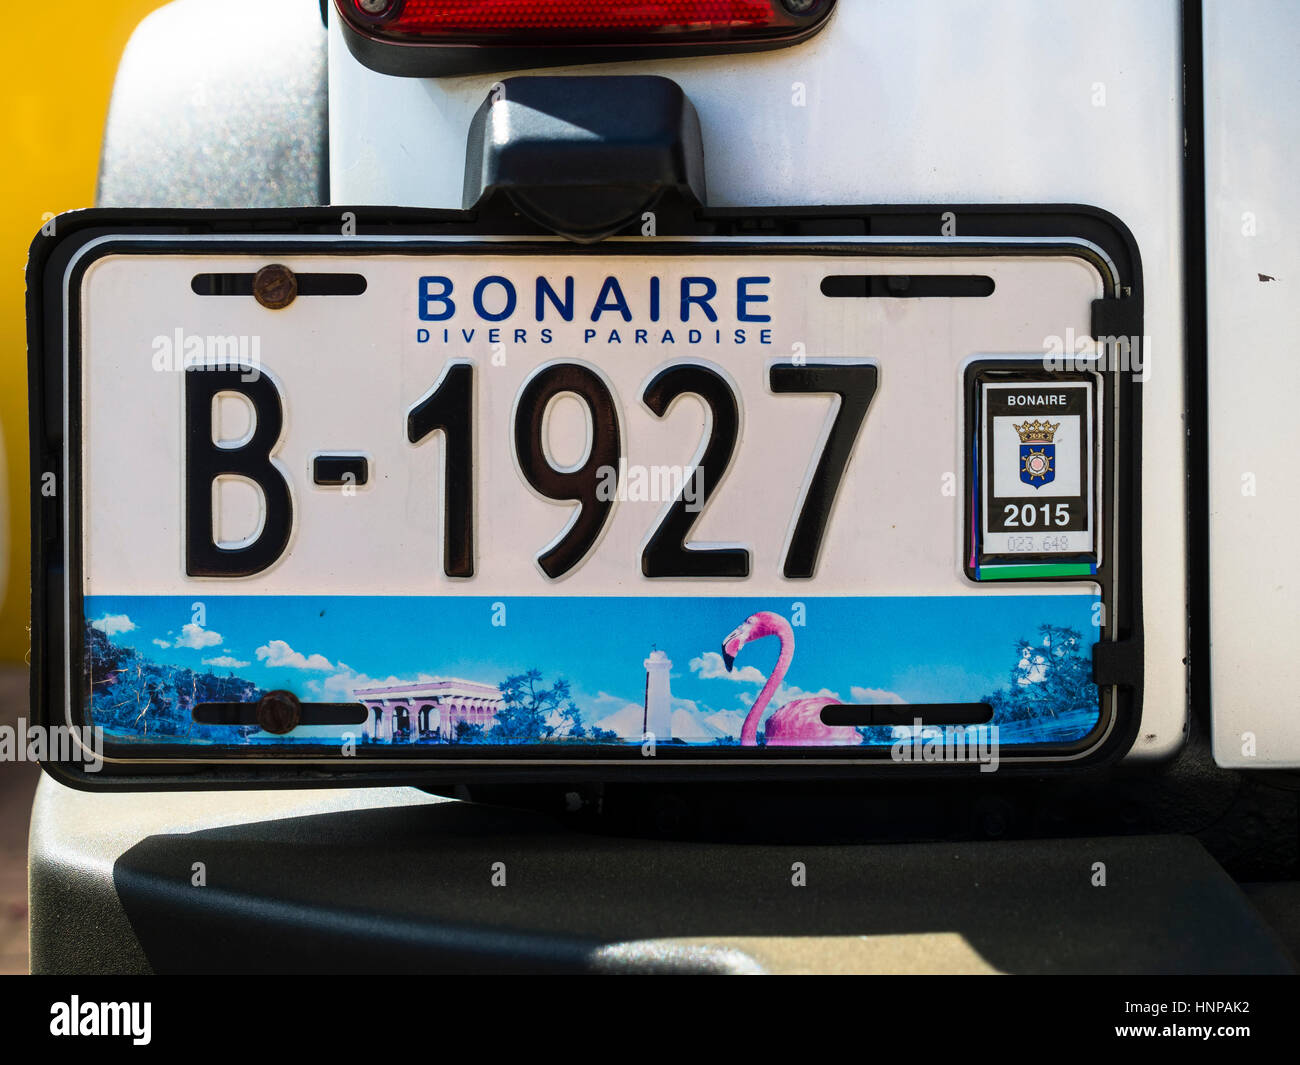 License plate of a car, Kralendijk, Bonaire Island, Bonaire, Netherlands Antilles Stock Photo